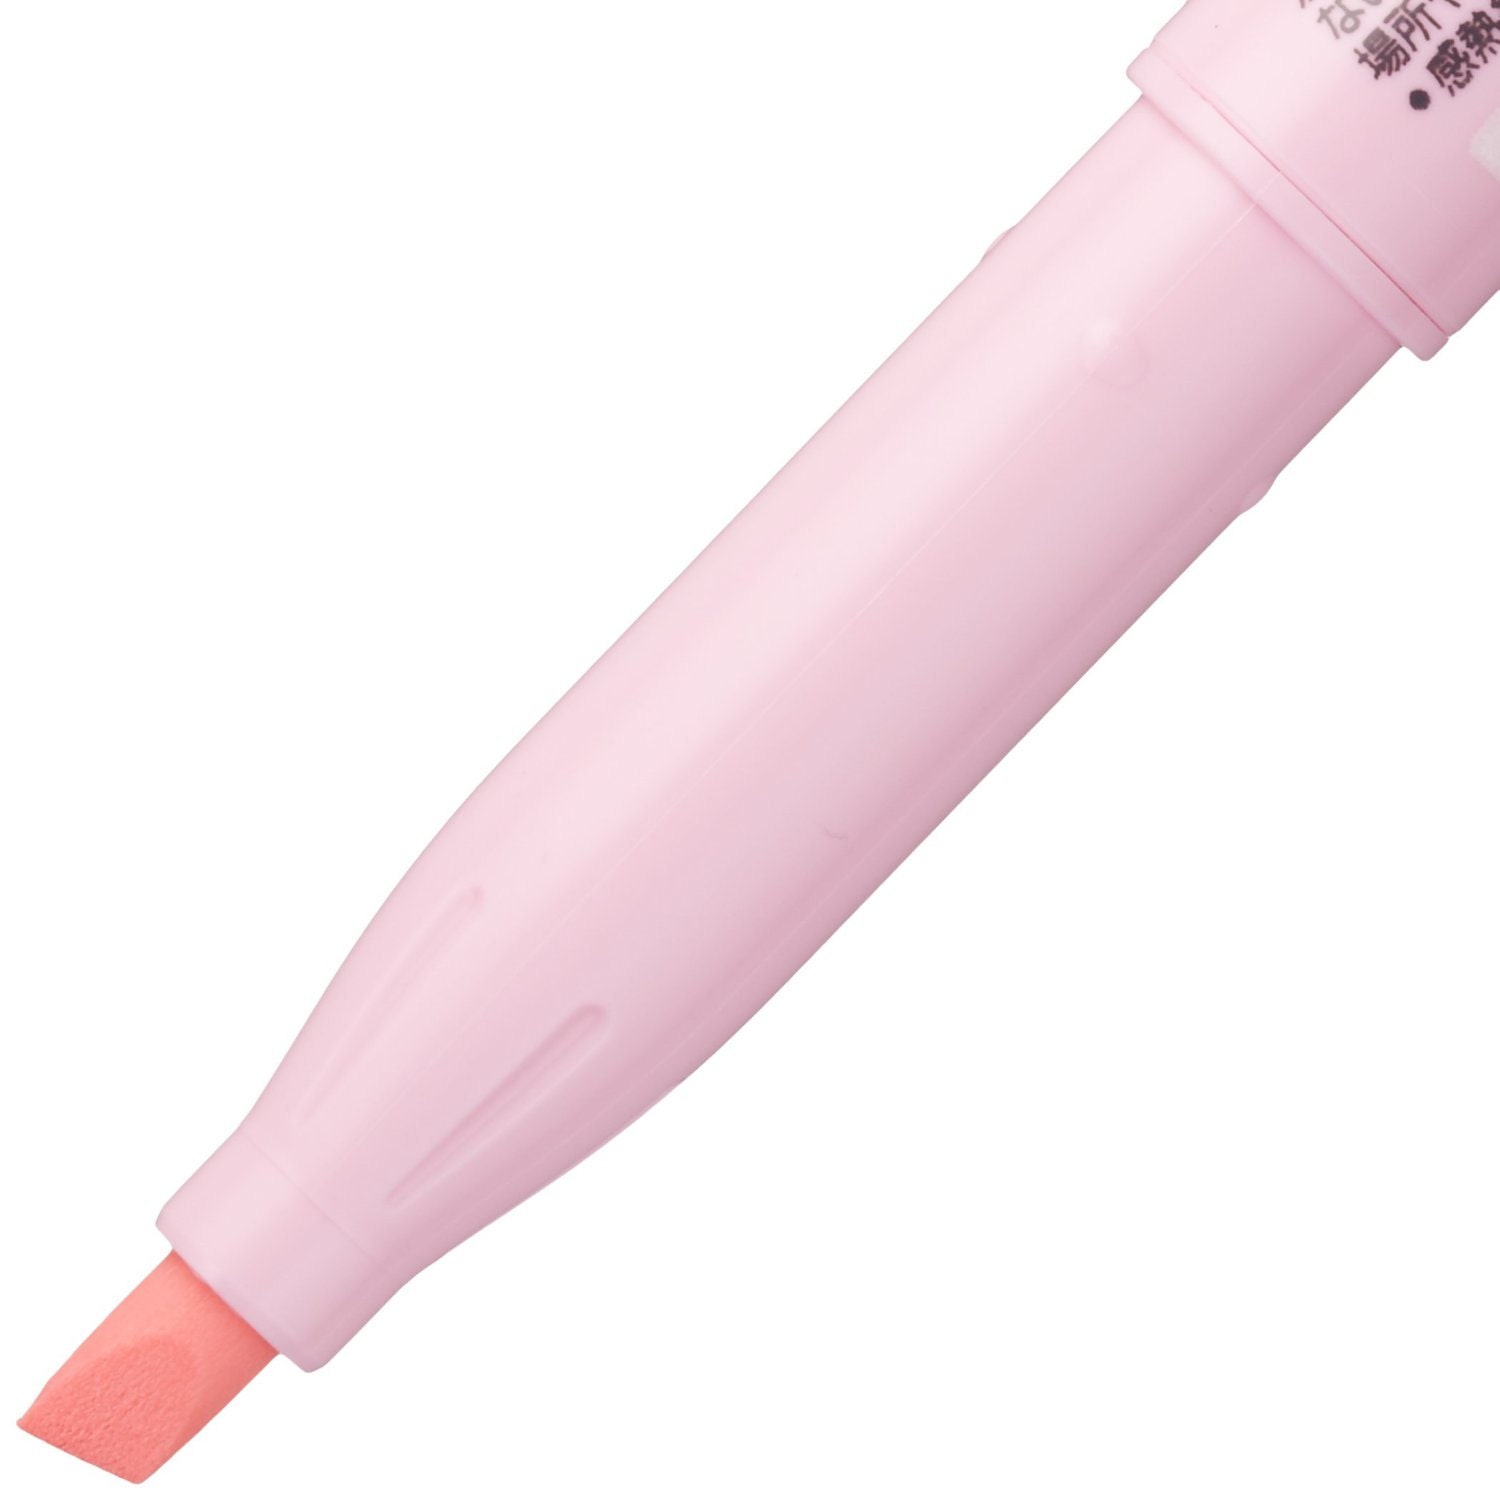 Pilot FriXion Erasable Markers 6pcs Pastel Highlighters Soft Color Erasable  Pen Kawaii Stationery Scrapbooking Pens For School